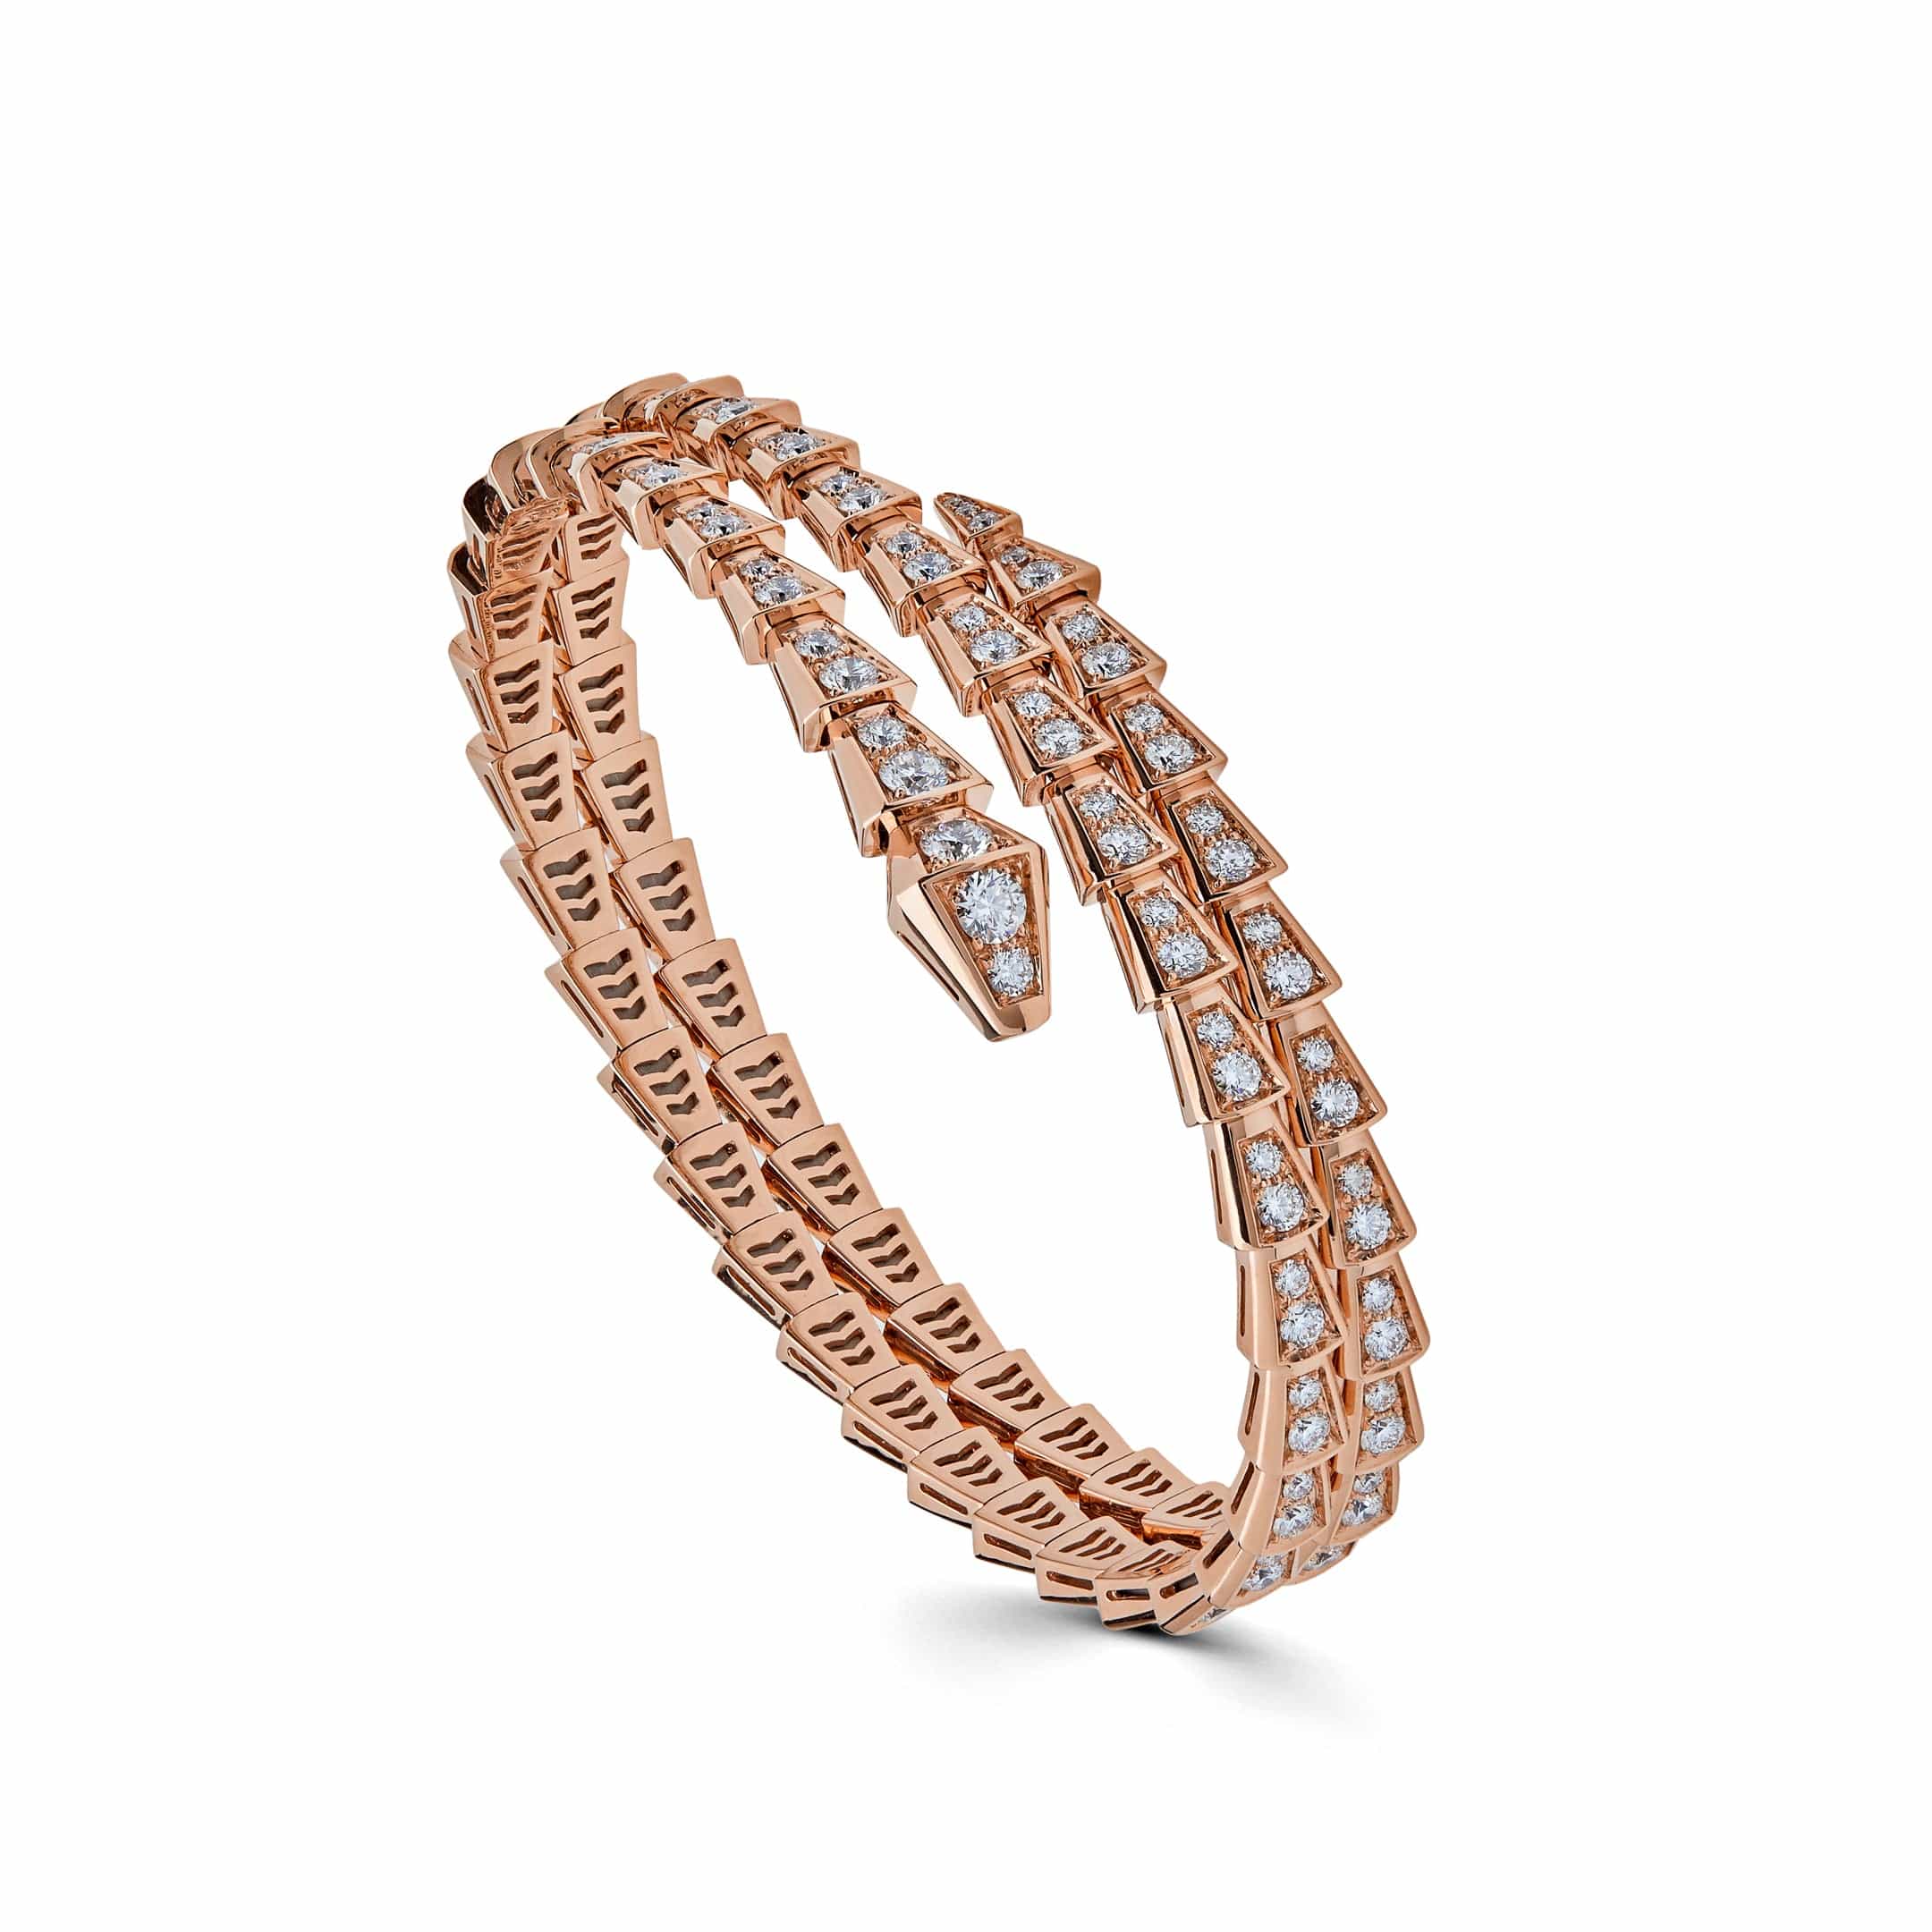 SERPENTI bracelet in 18kt white gold with pavé diamonds. | Bvlgari bracelet,  Bvlgari jewelry, Bvlgari serpenti bracelet